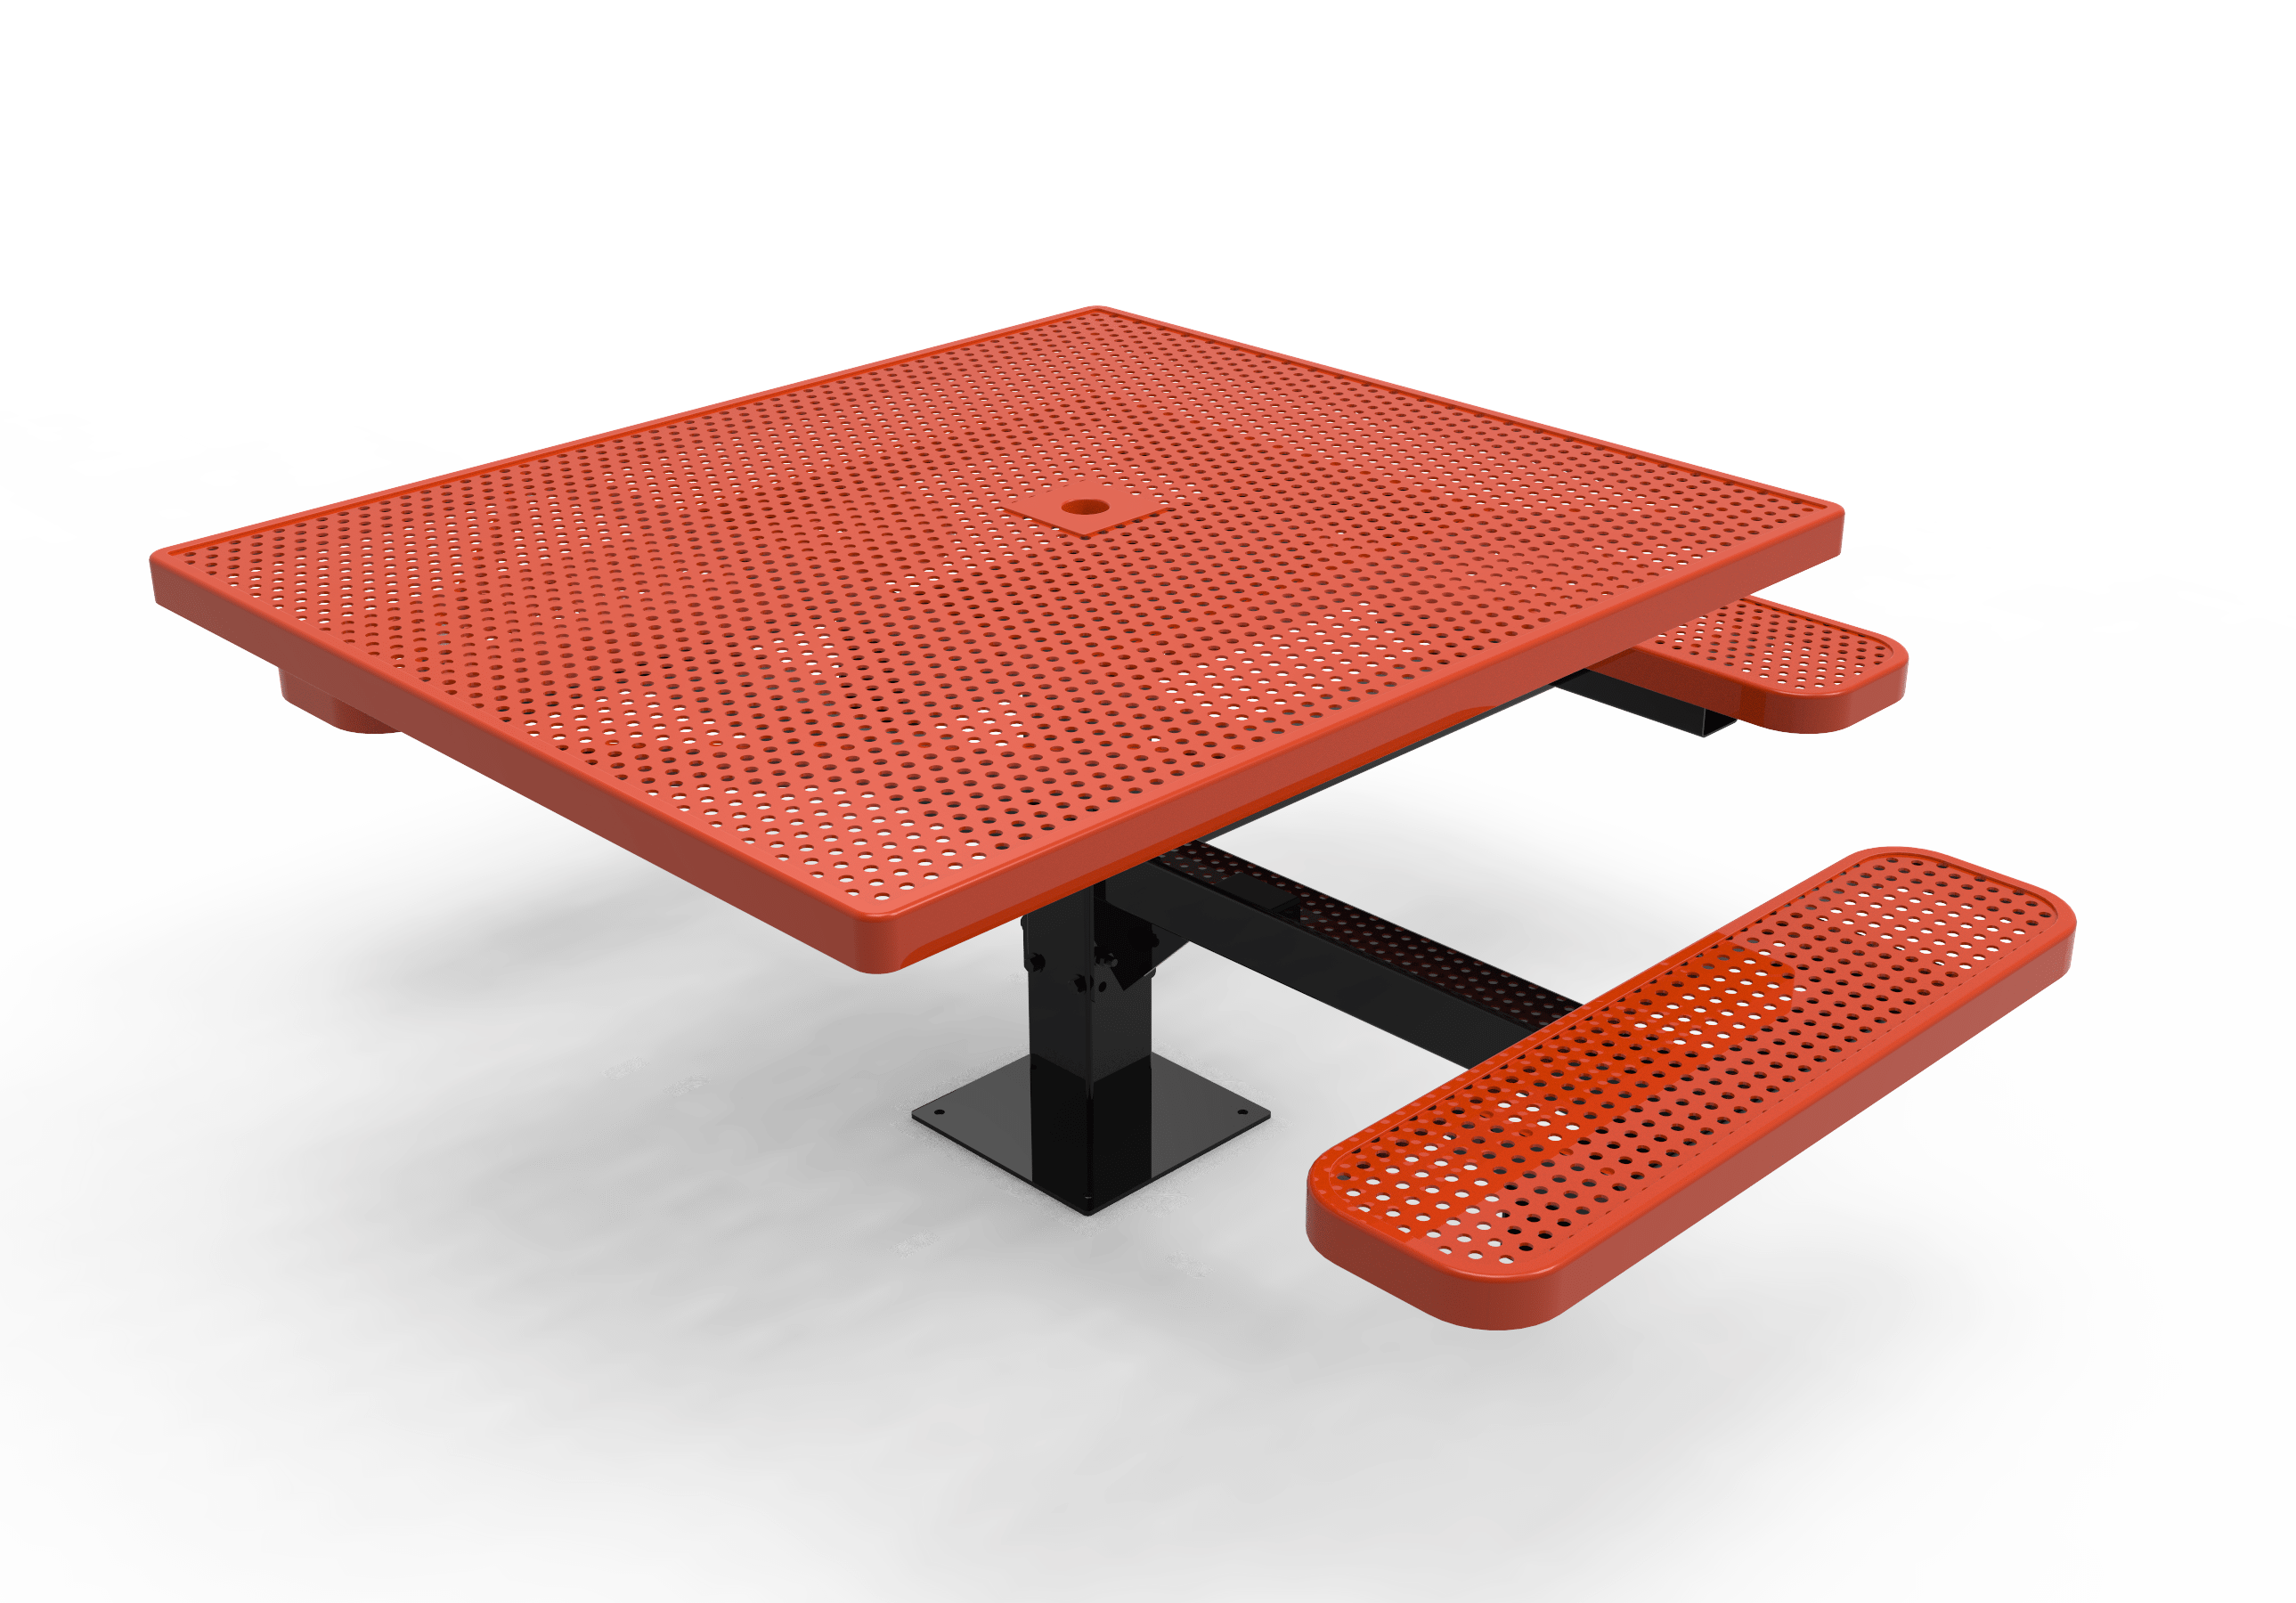 46″ Square Top Pedestal Surface Table 3 Seat-Punch
TSQ46-D-15-013
Industry Standard Finish
$1709.00
TSQ46-B-15-013
Advantage Premium Finish
$2049.00
